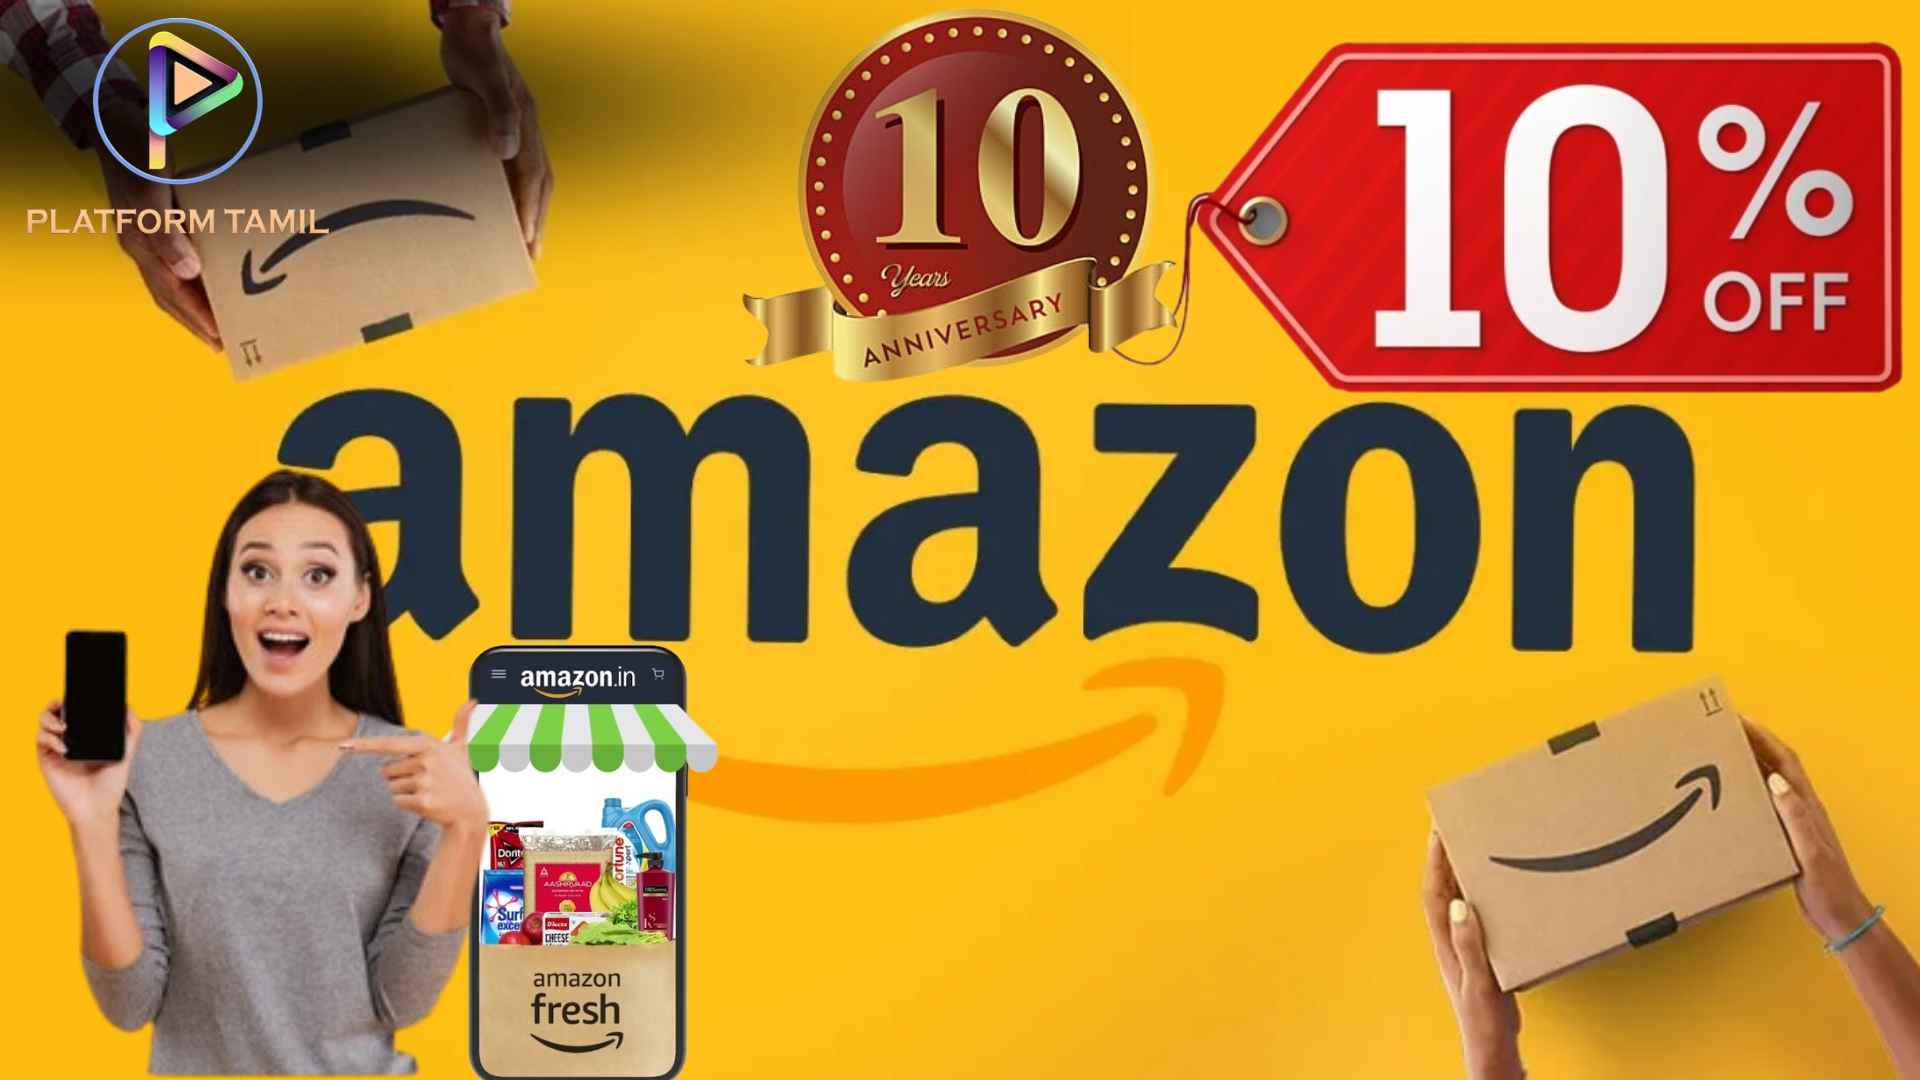 Amazon India 10th Anniversary - Platform Tamil